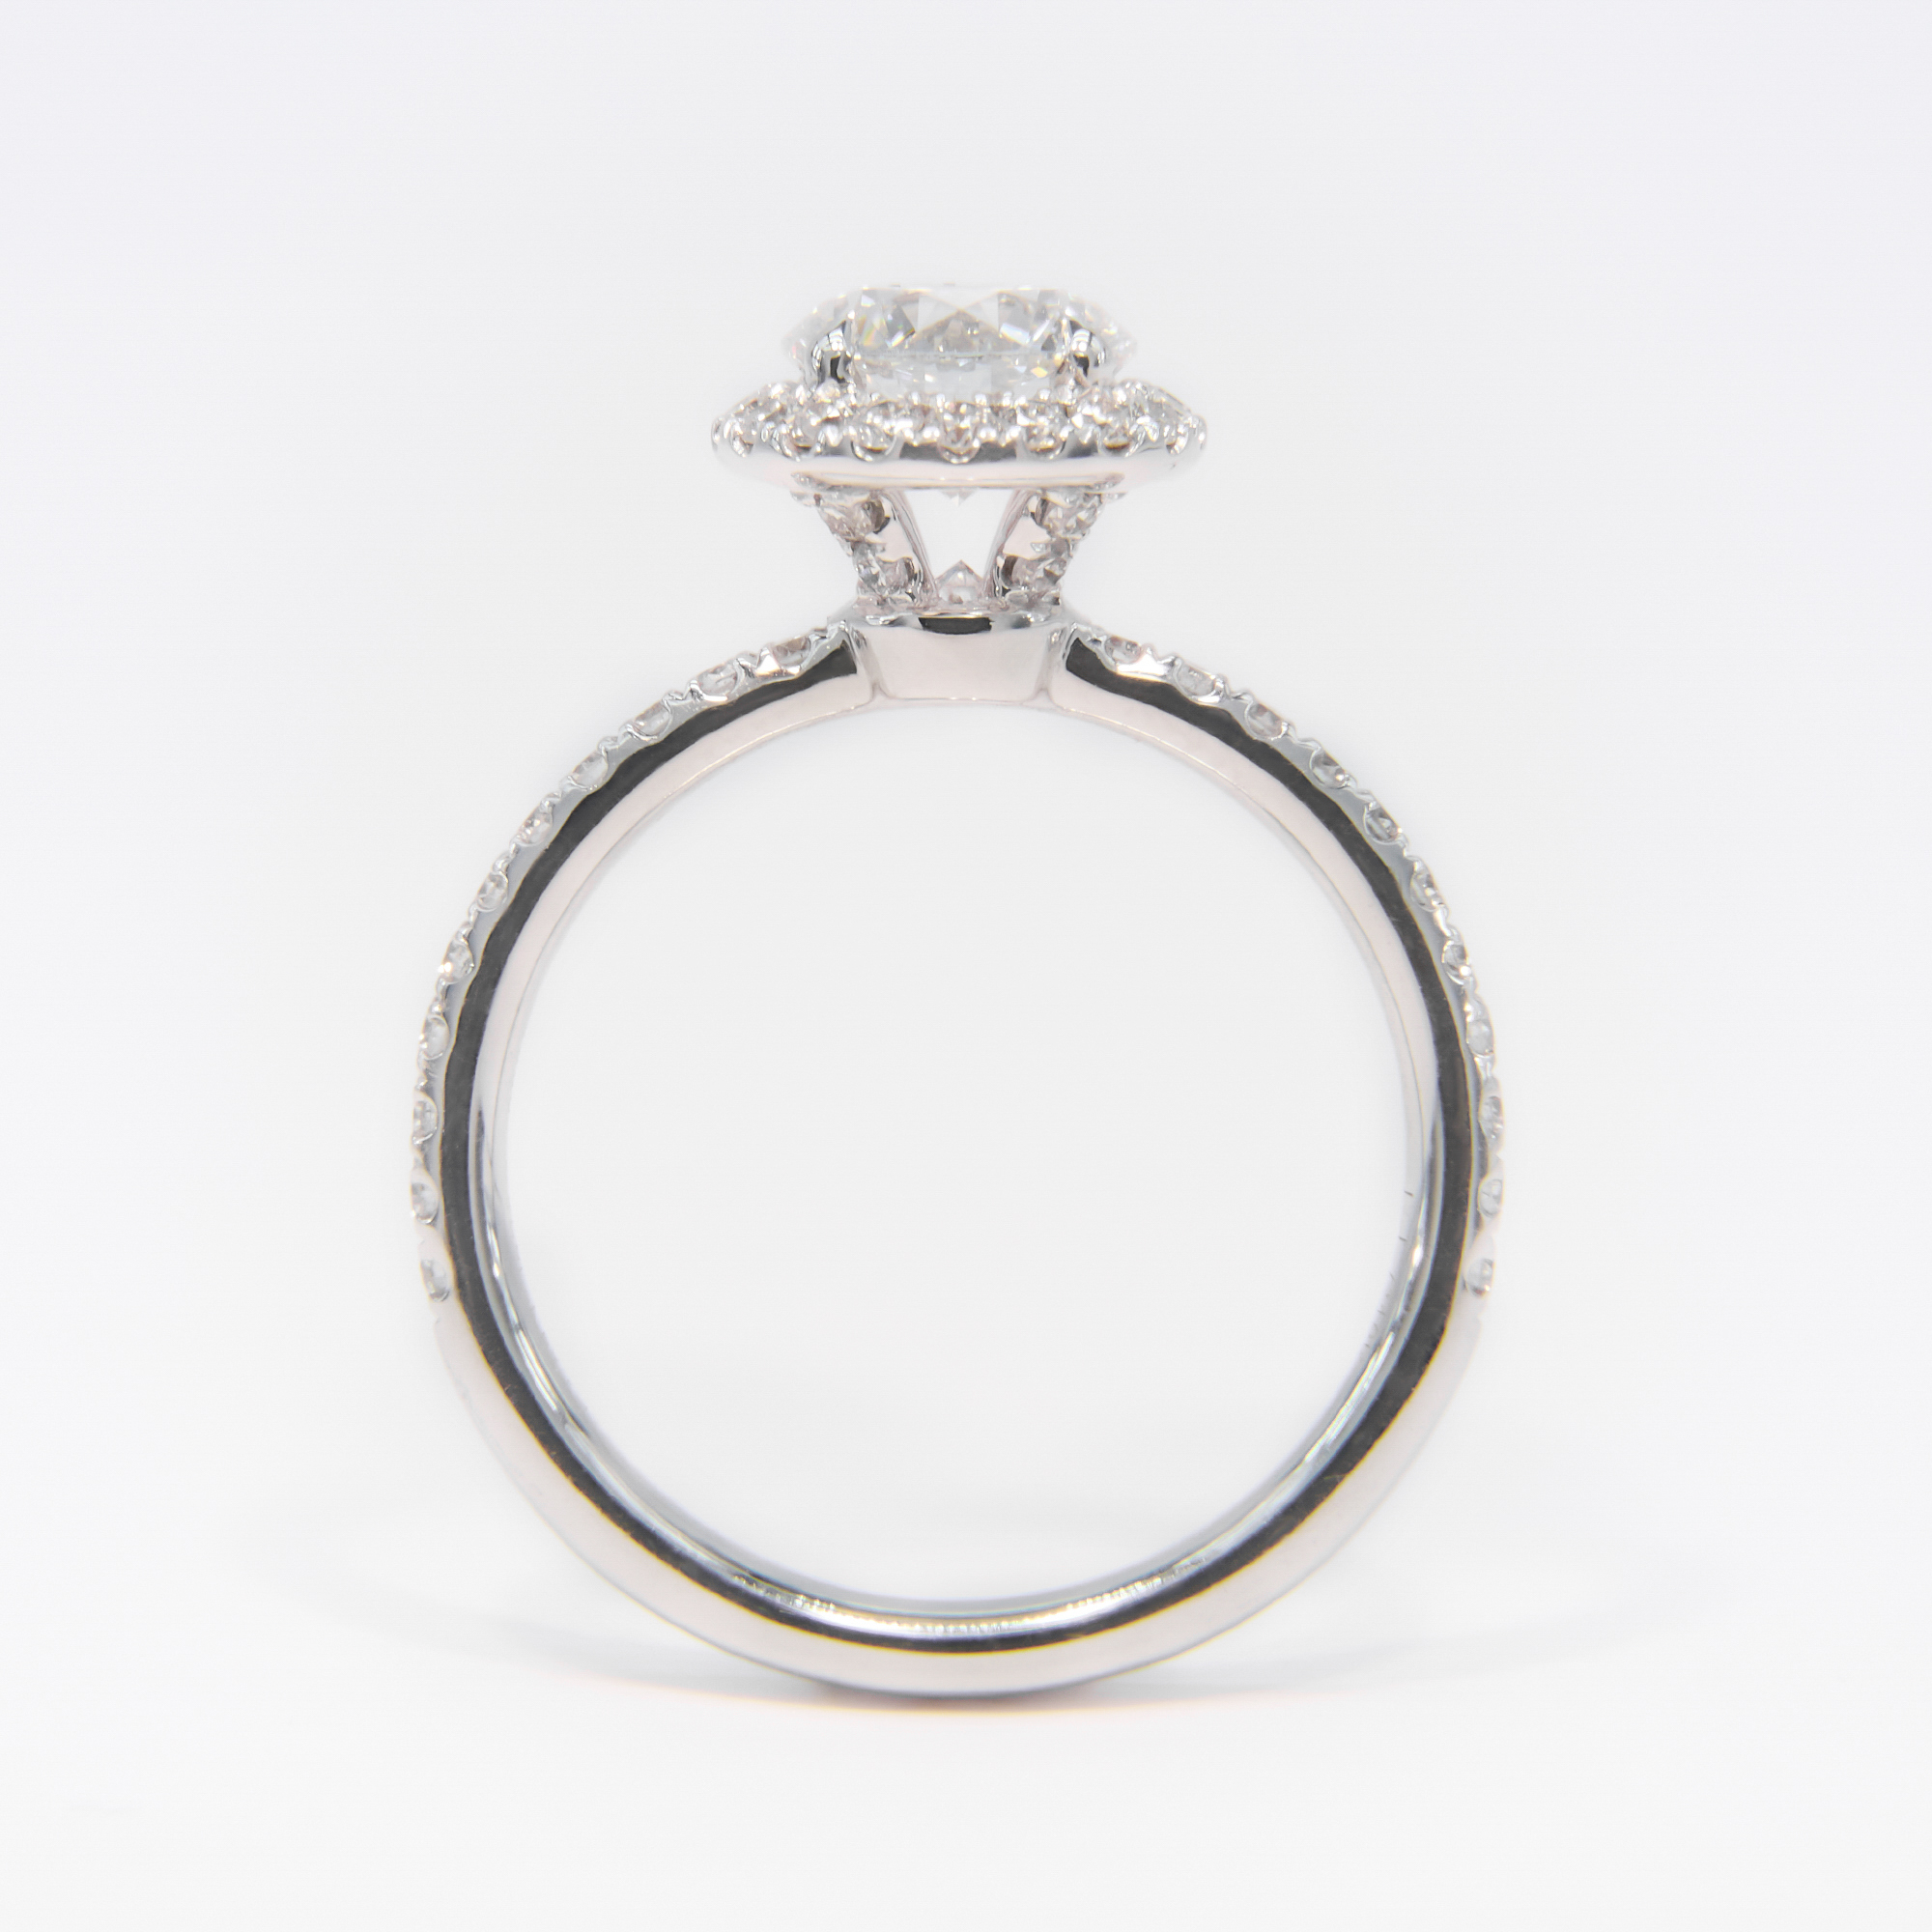 Certified 14K White Gold Round Lab Grown Diamond Halo Engagement Ring